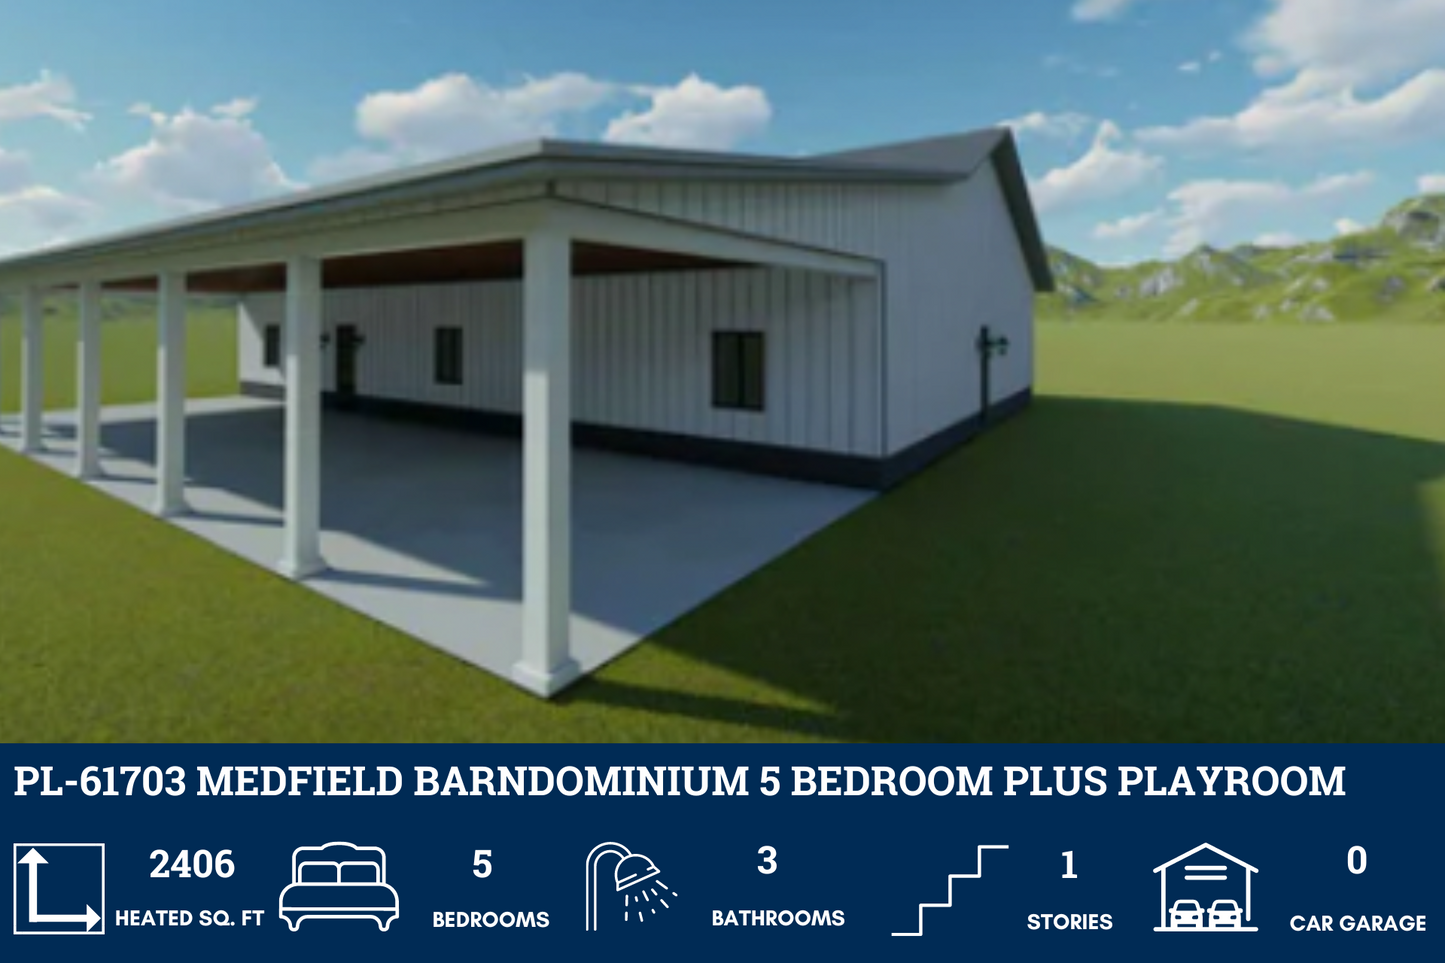 PL-61703 Medfield Barndominium House Plan